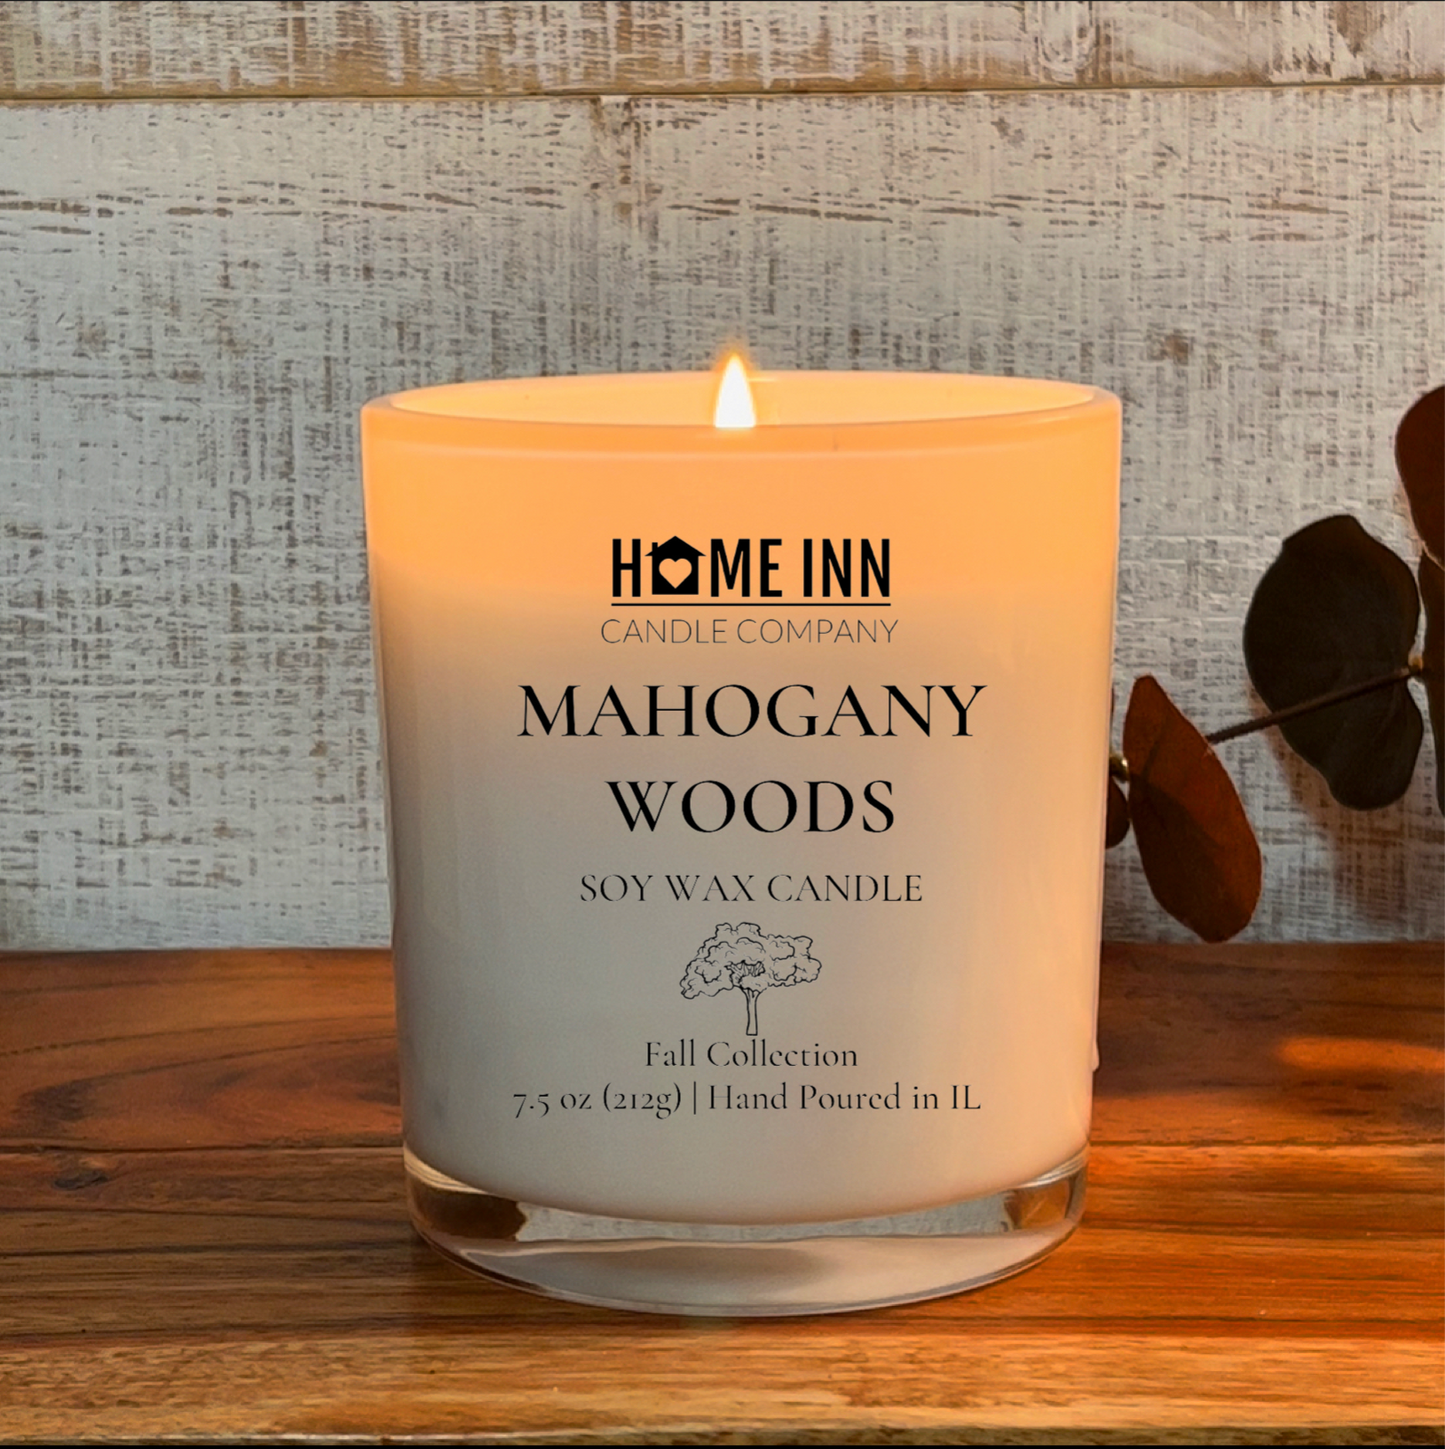 Mahogany Woods Candle